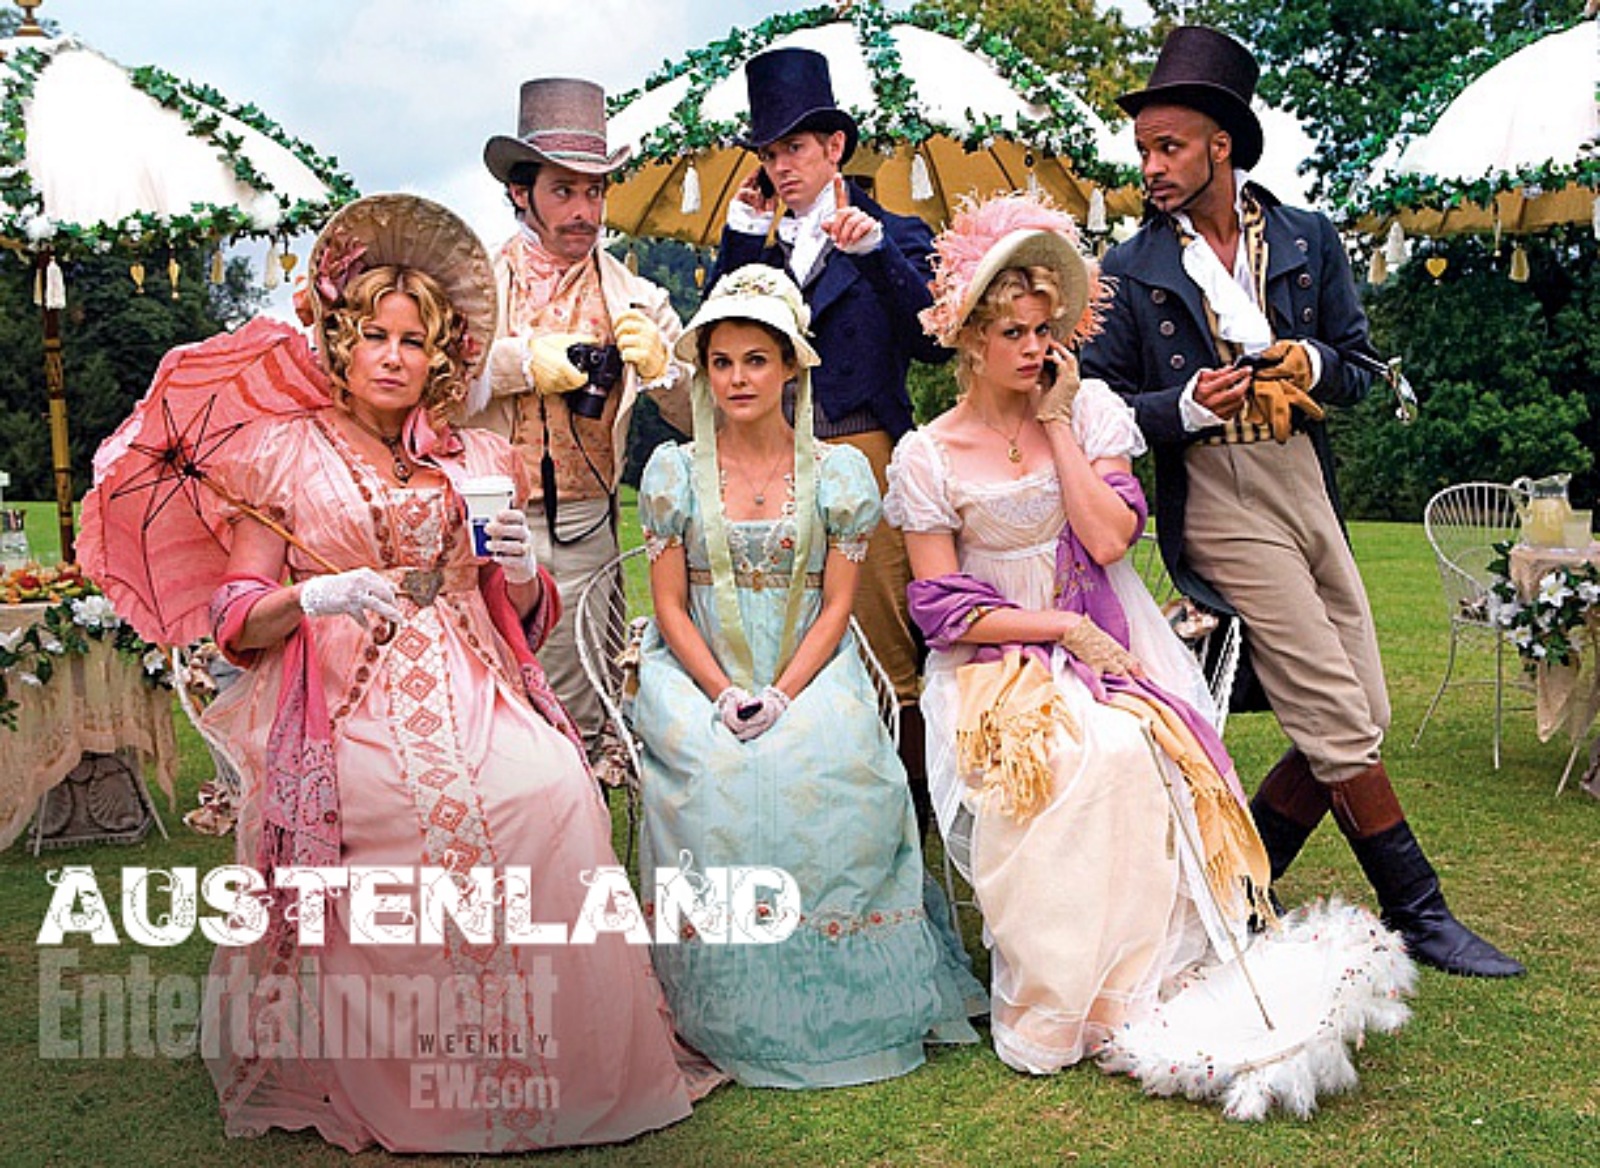 Austenland cast - Jennifer Coolidge, James Callis, Kerri Russell, Jj Feild, Georgia King and Ricky Whittle